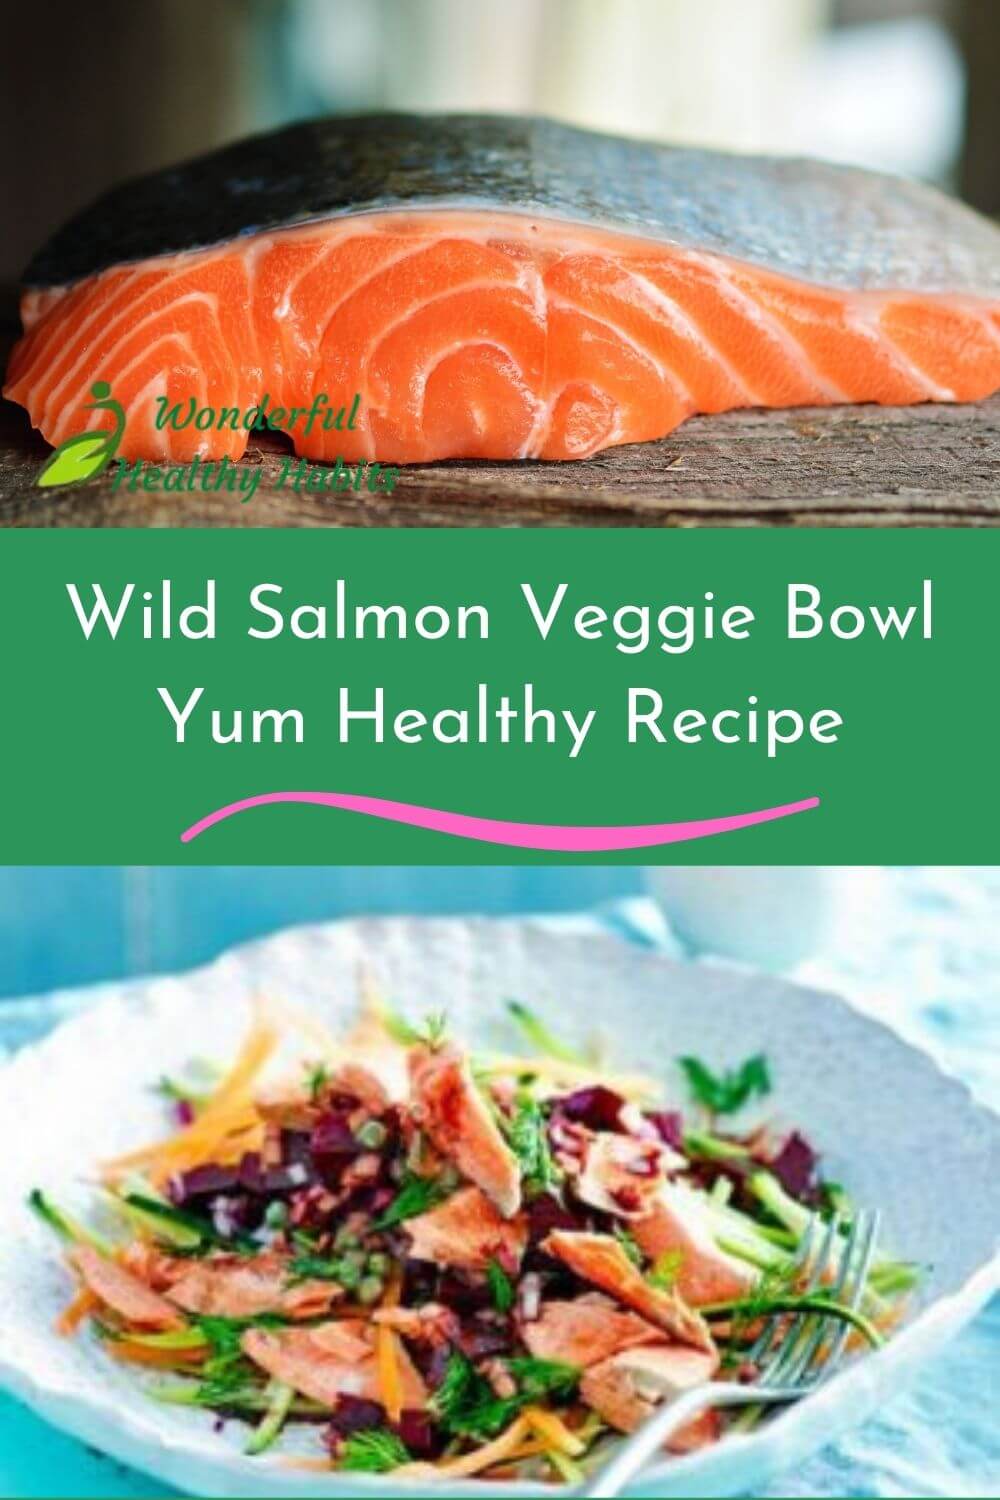 Wild Salmon Veggie Bowl - Yum Healthy Recipe